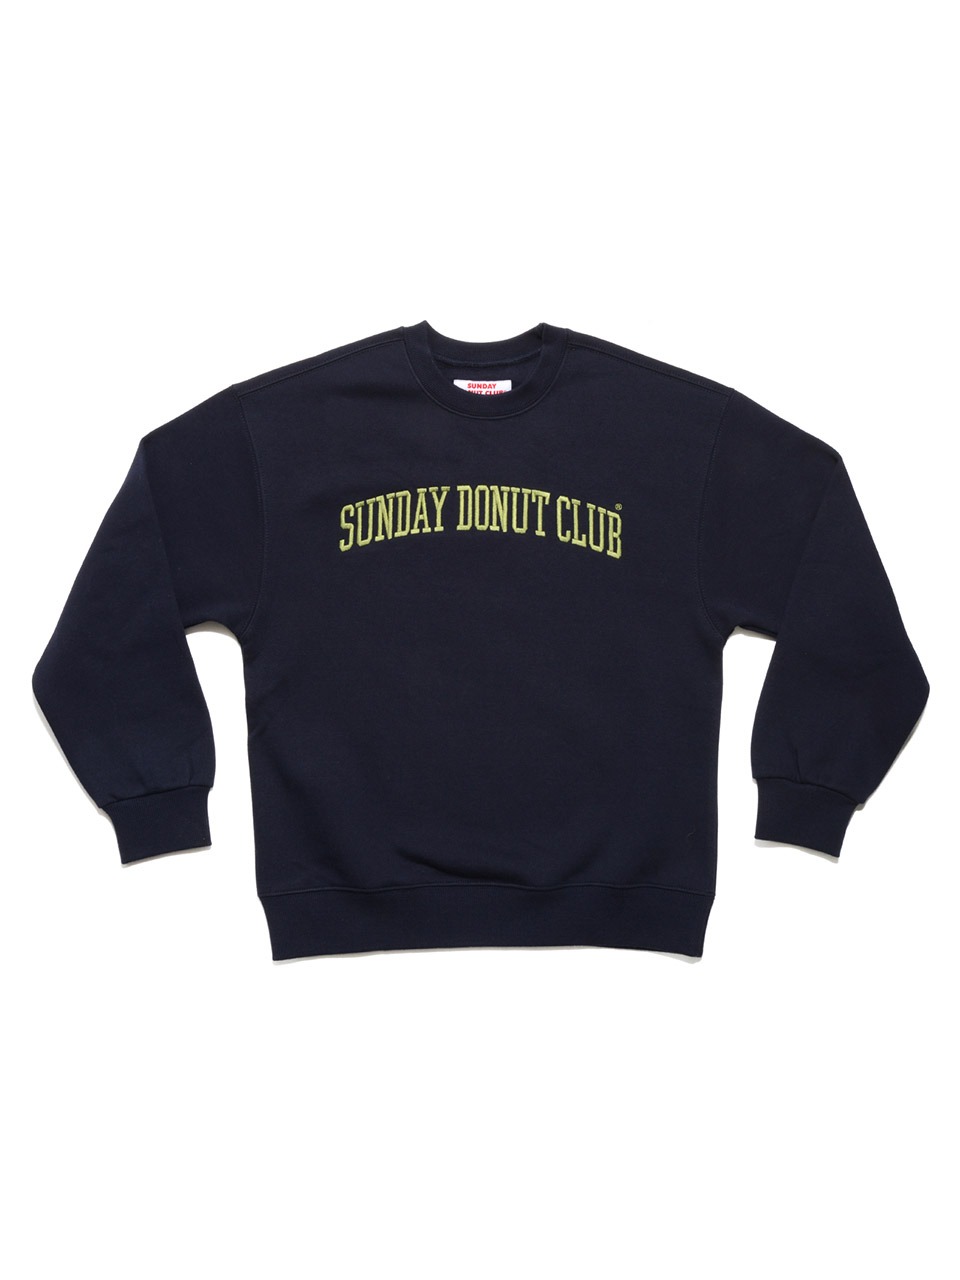 SUNDAY DONUT CLUB SWEATSHIRT [Navy]